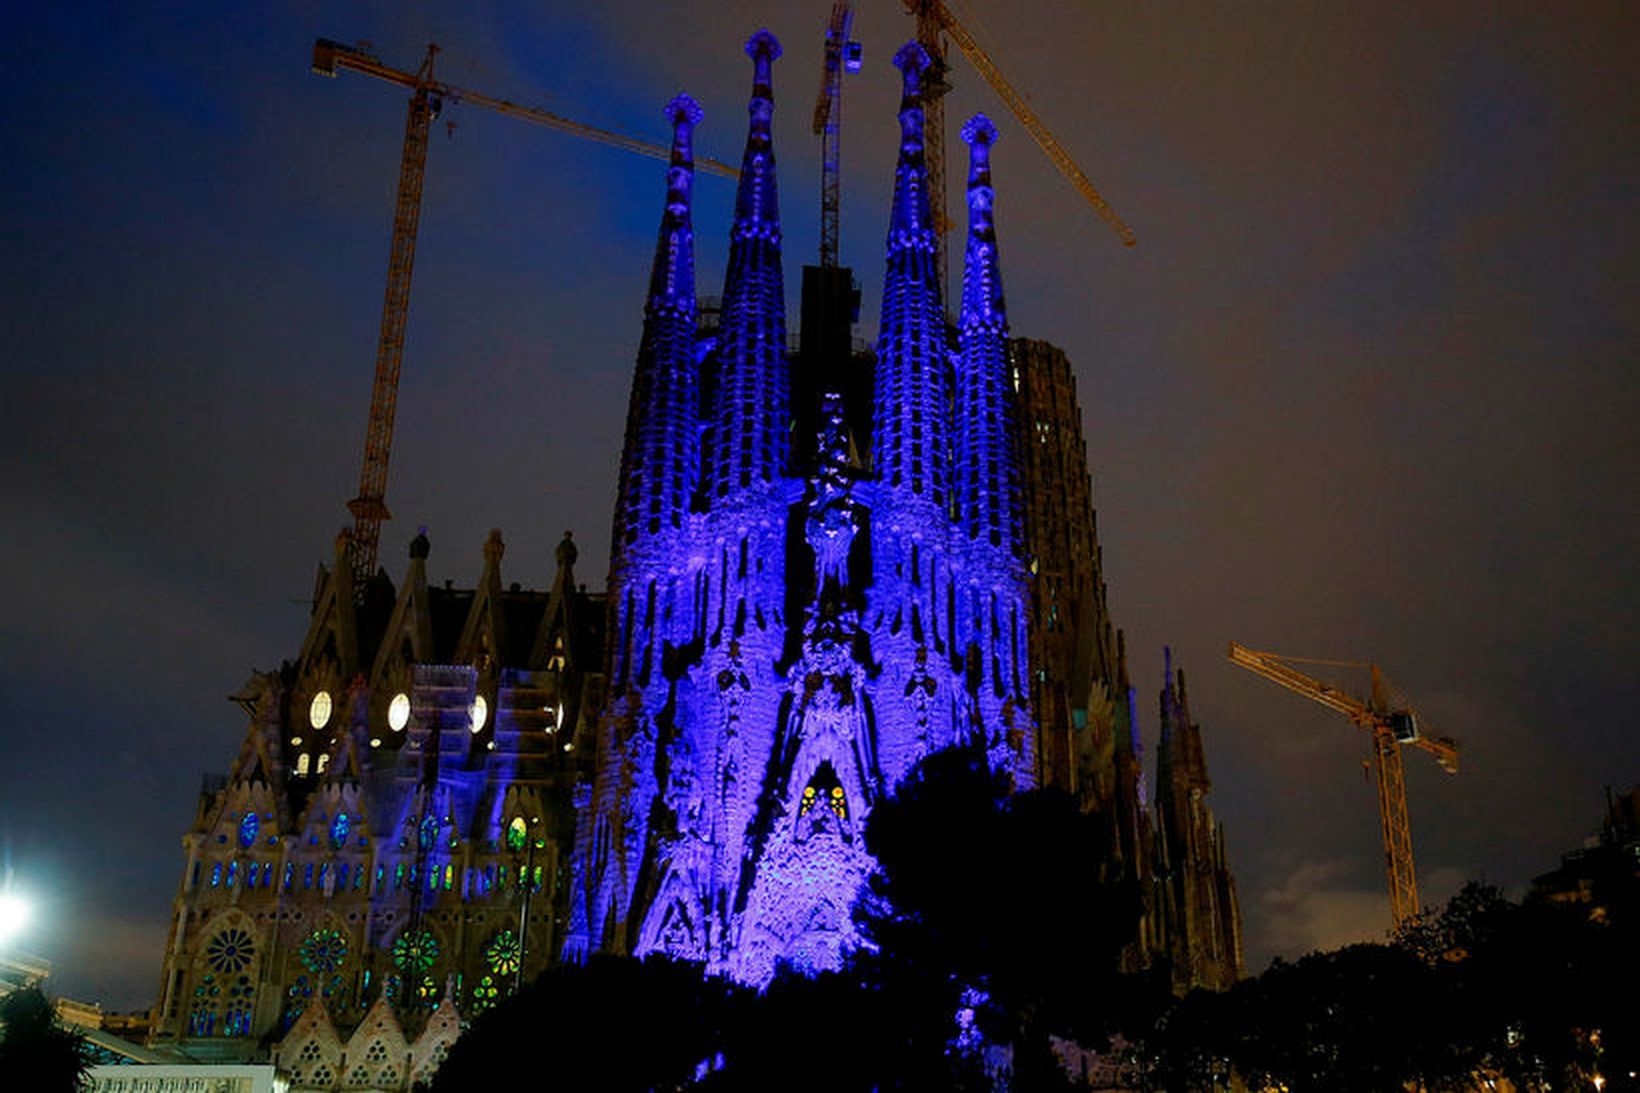 Sagrada Familia kirkjan í Barcelona lýst upp í bláum lit …